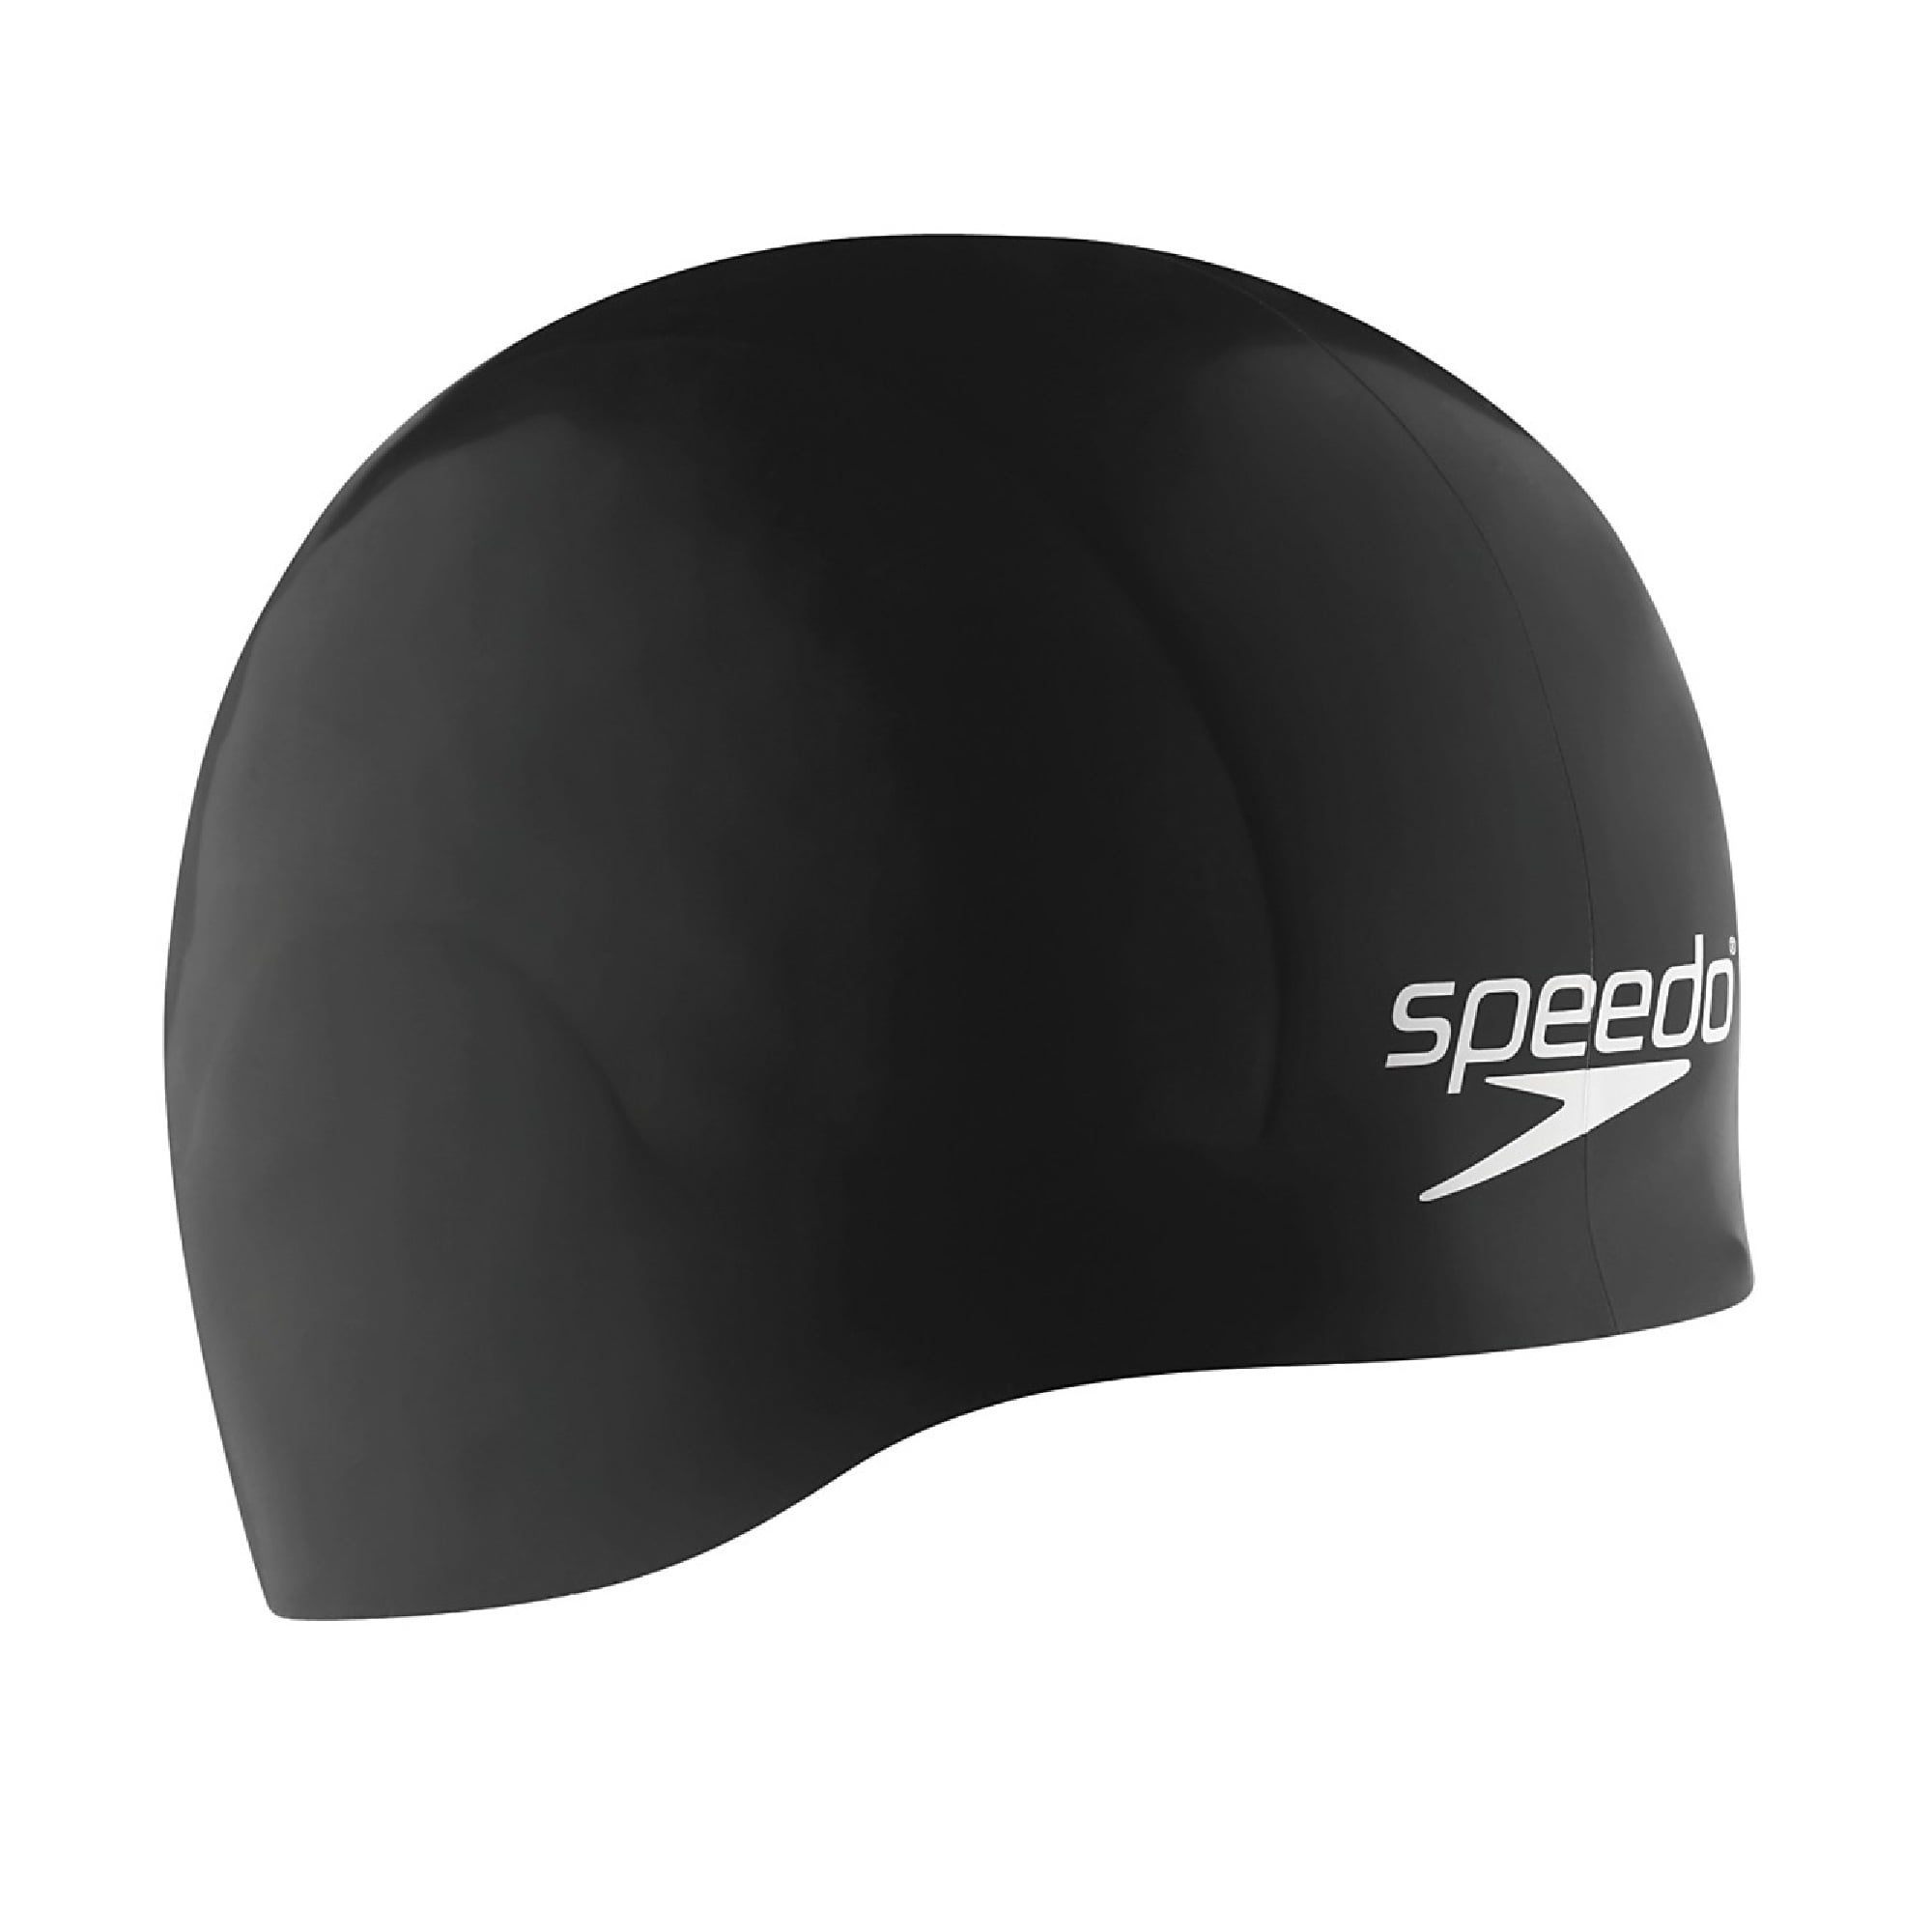 speedo swimming cap aqua v black osfa new in packet 